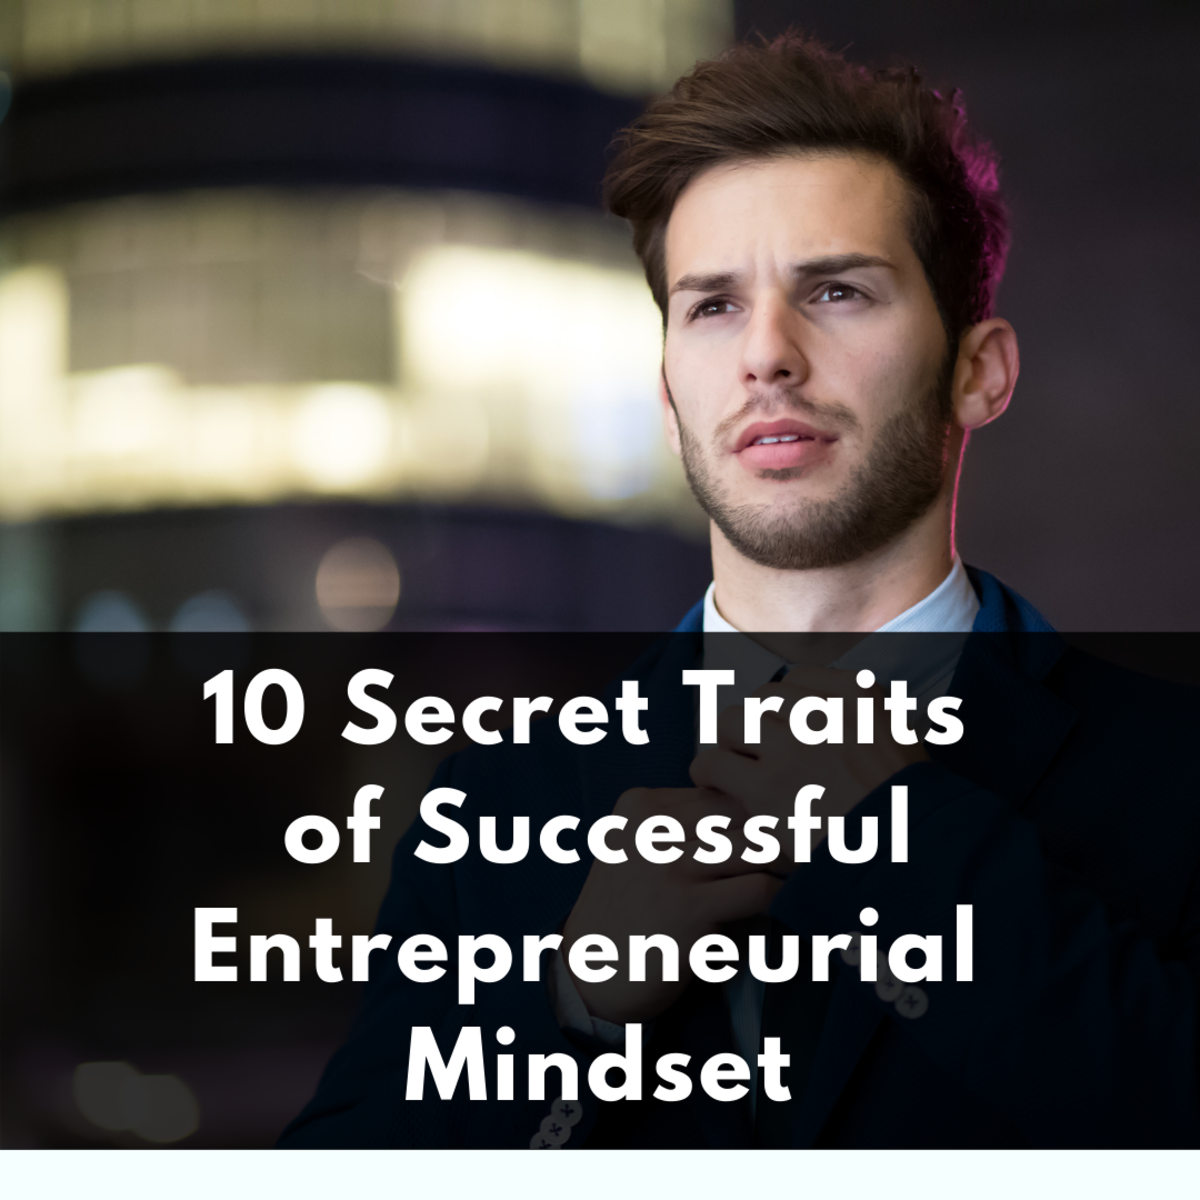 10 Secret Traits of Successful Entrepreneurial Mindset